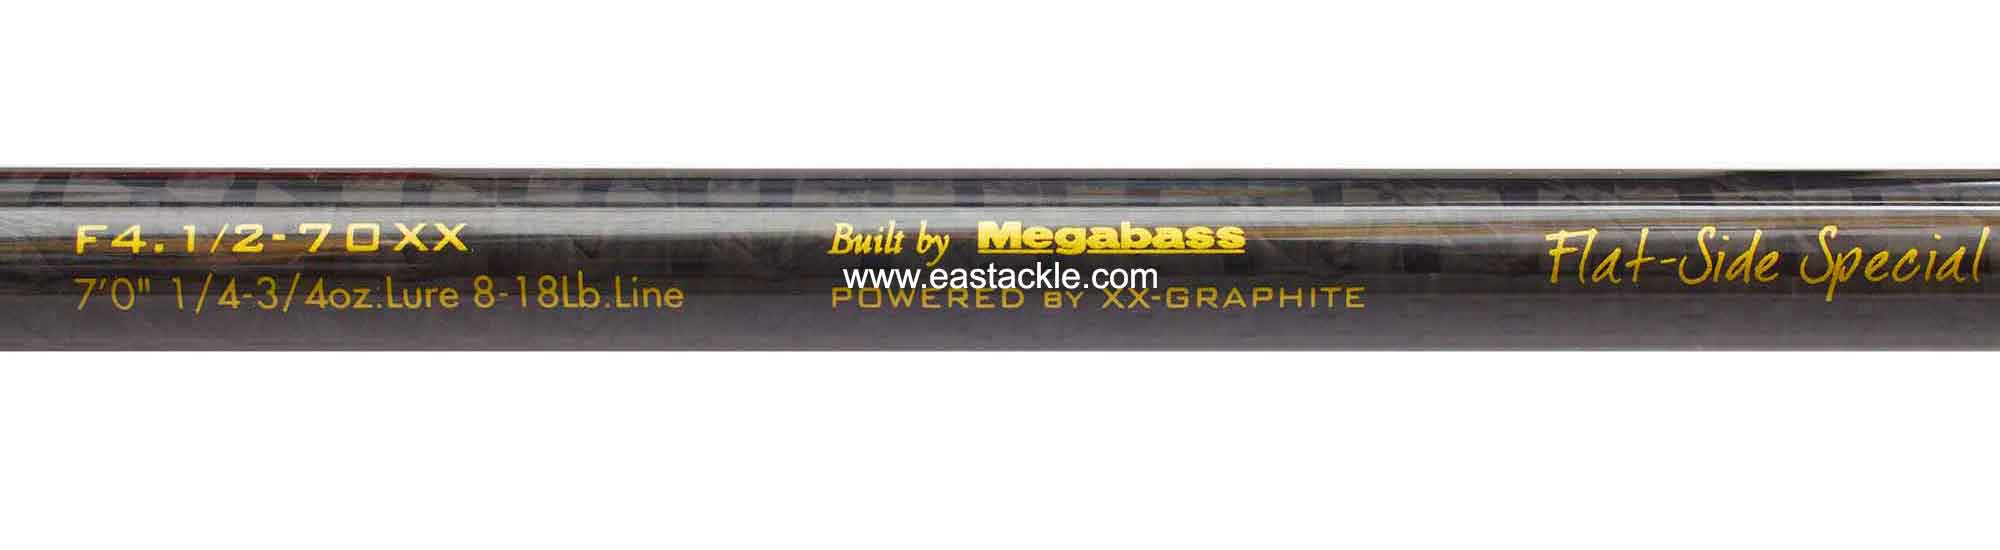 Megabass - Orochi XX - F4.1/2-70XX - FLAT SIDE SPECIAL - Bait Casting Rod - Blank Specifications